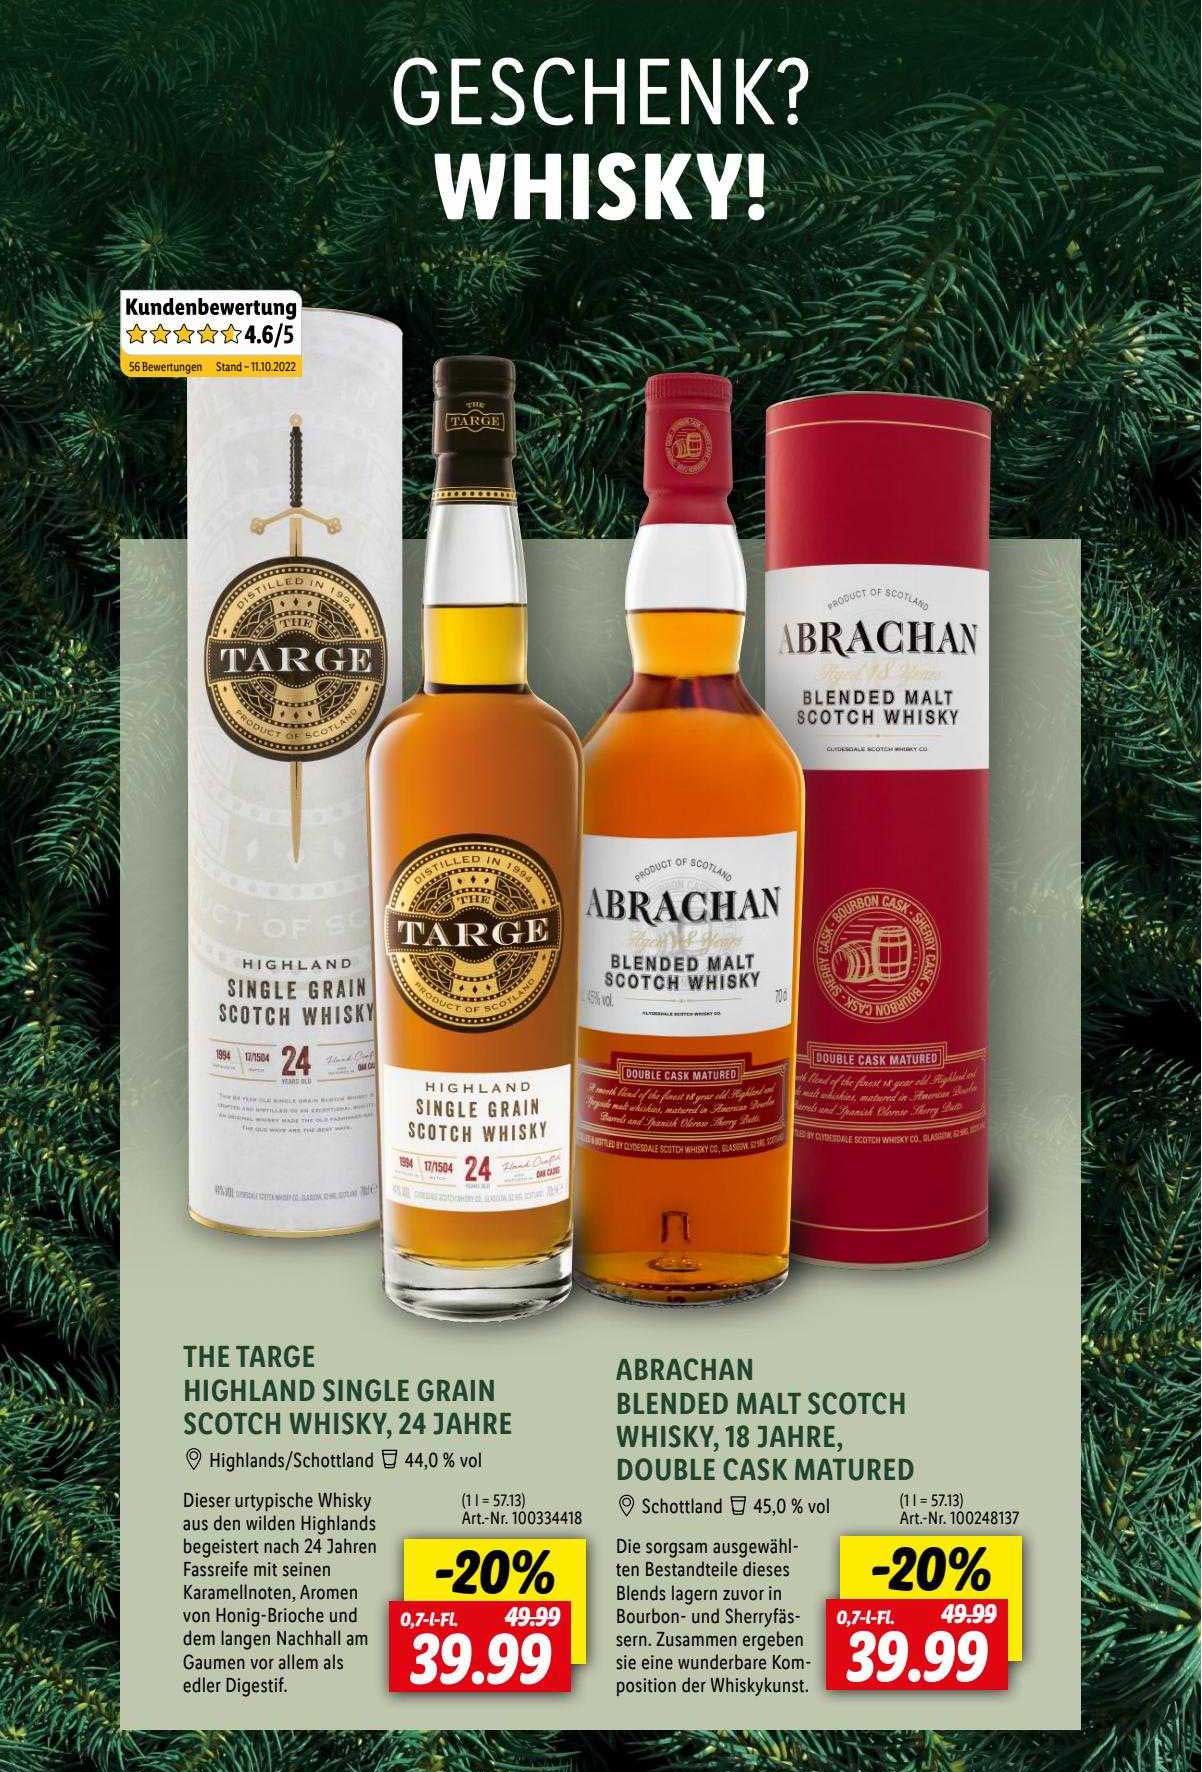 Lidl The Targe Highland Single Grain Scotch Whisky,24 Jahre Oder Abrachan Blended Malt Scotch Whisky, 18 Jahre, Double Cask Matured